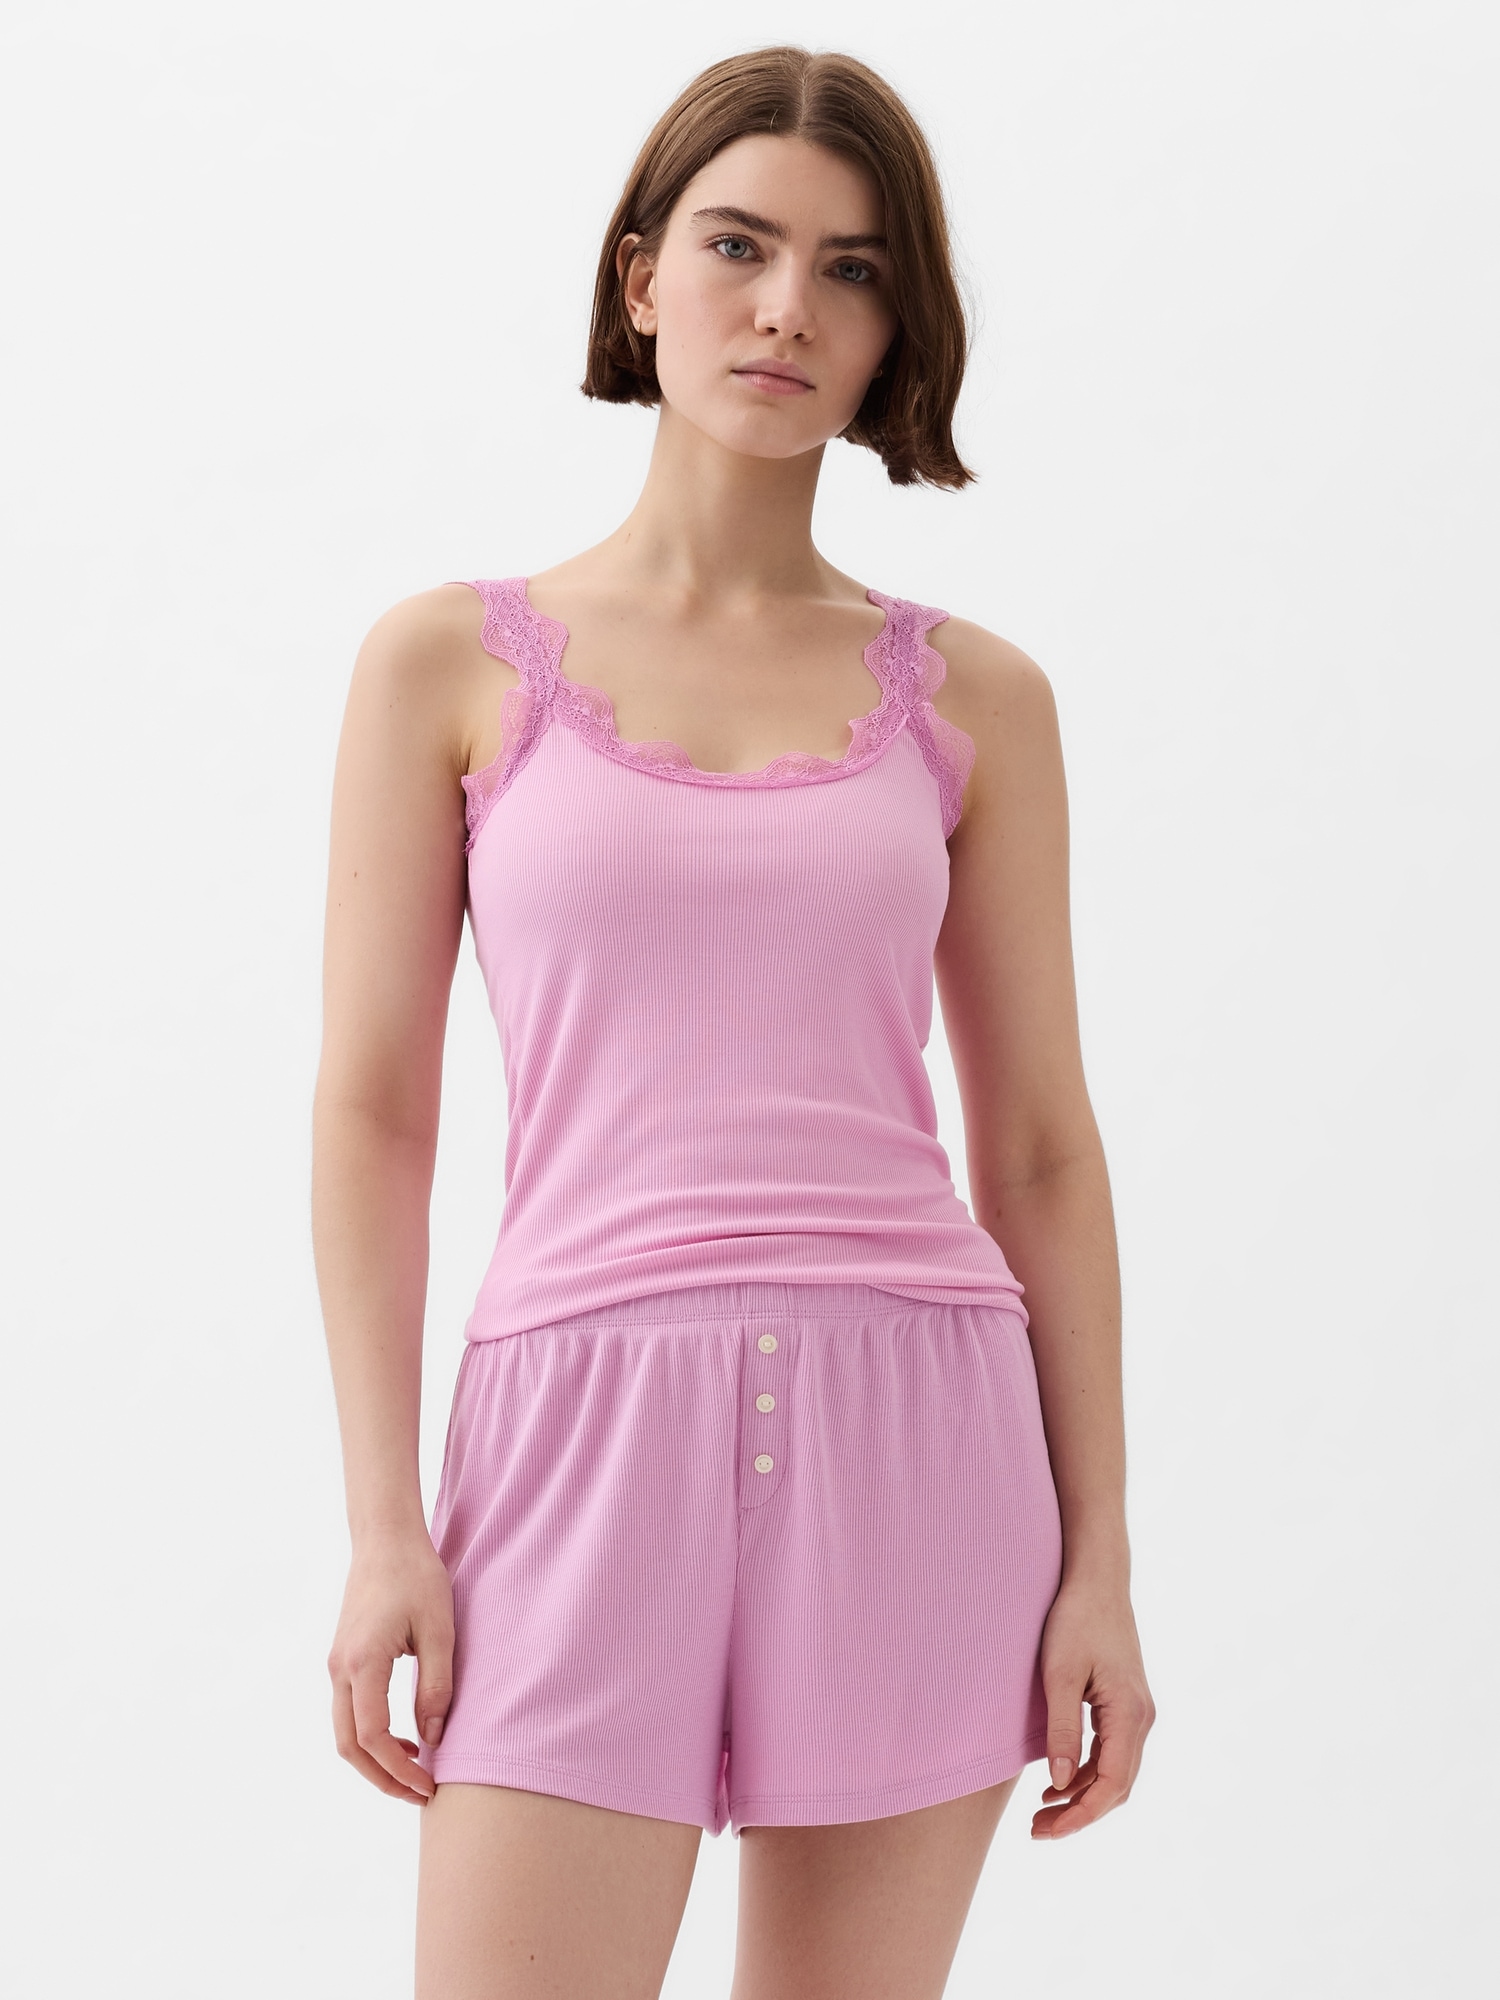 NWT PJ Salvage Medium Lilac Rose Pink Modal Knit Sleep Tank Top Shelf Bra  #PQ15